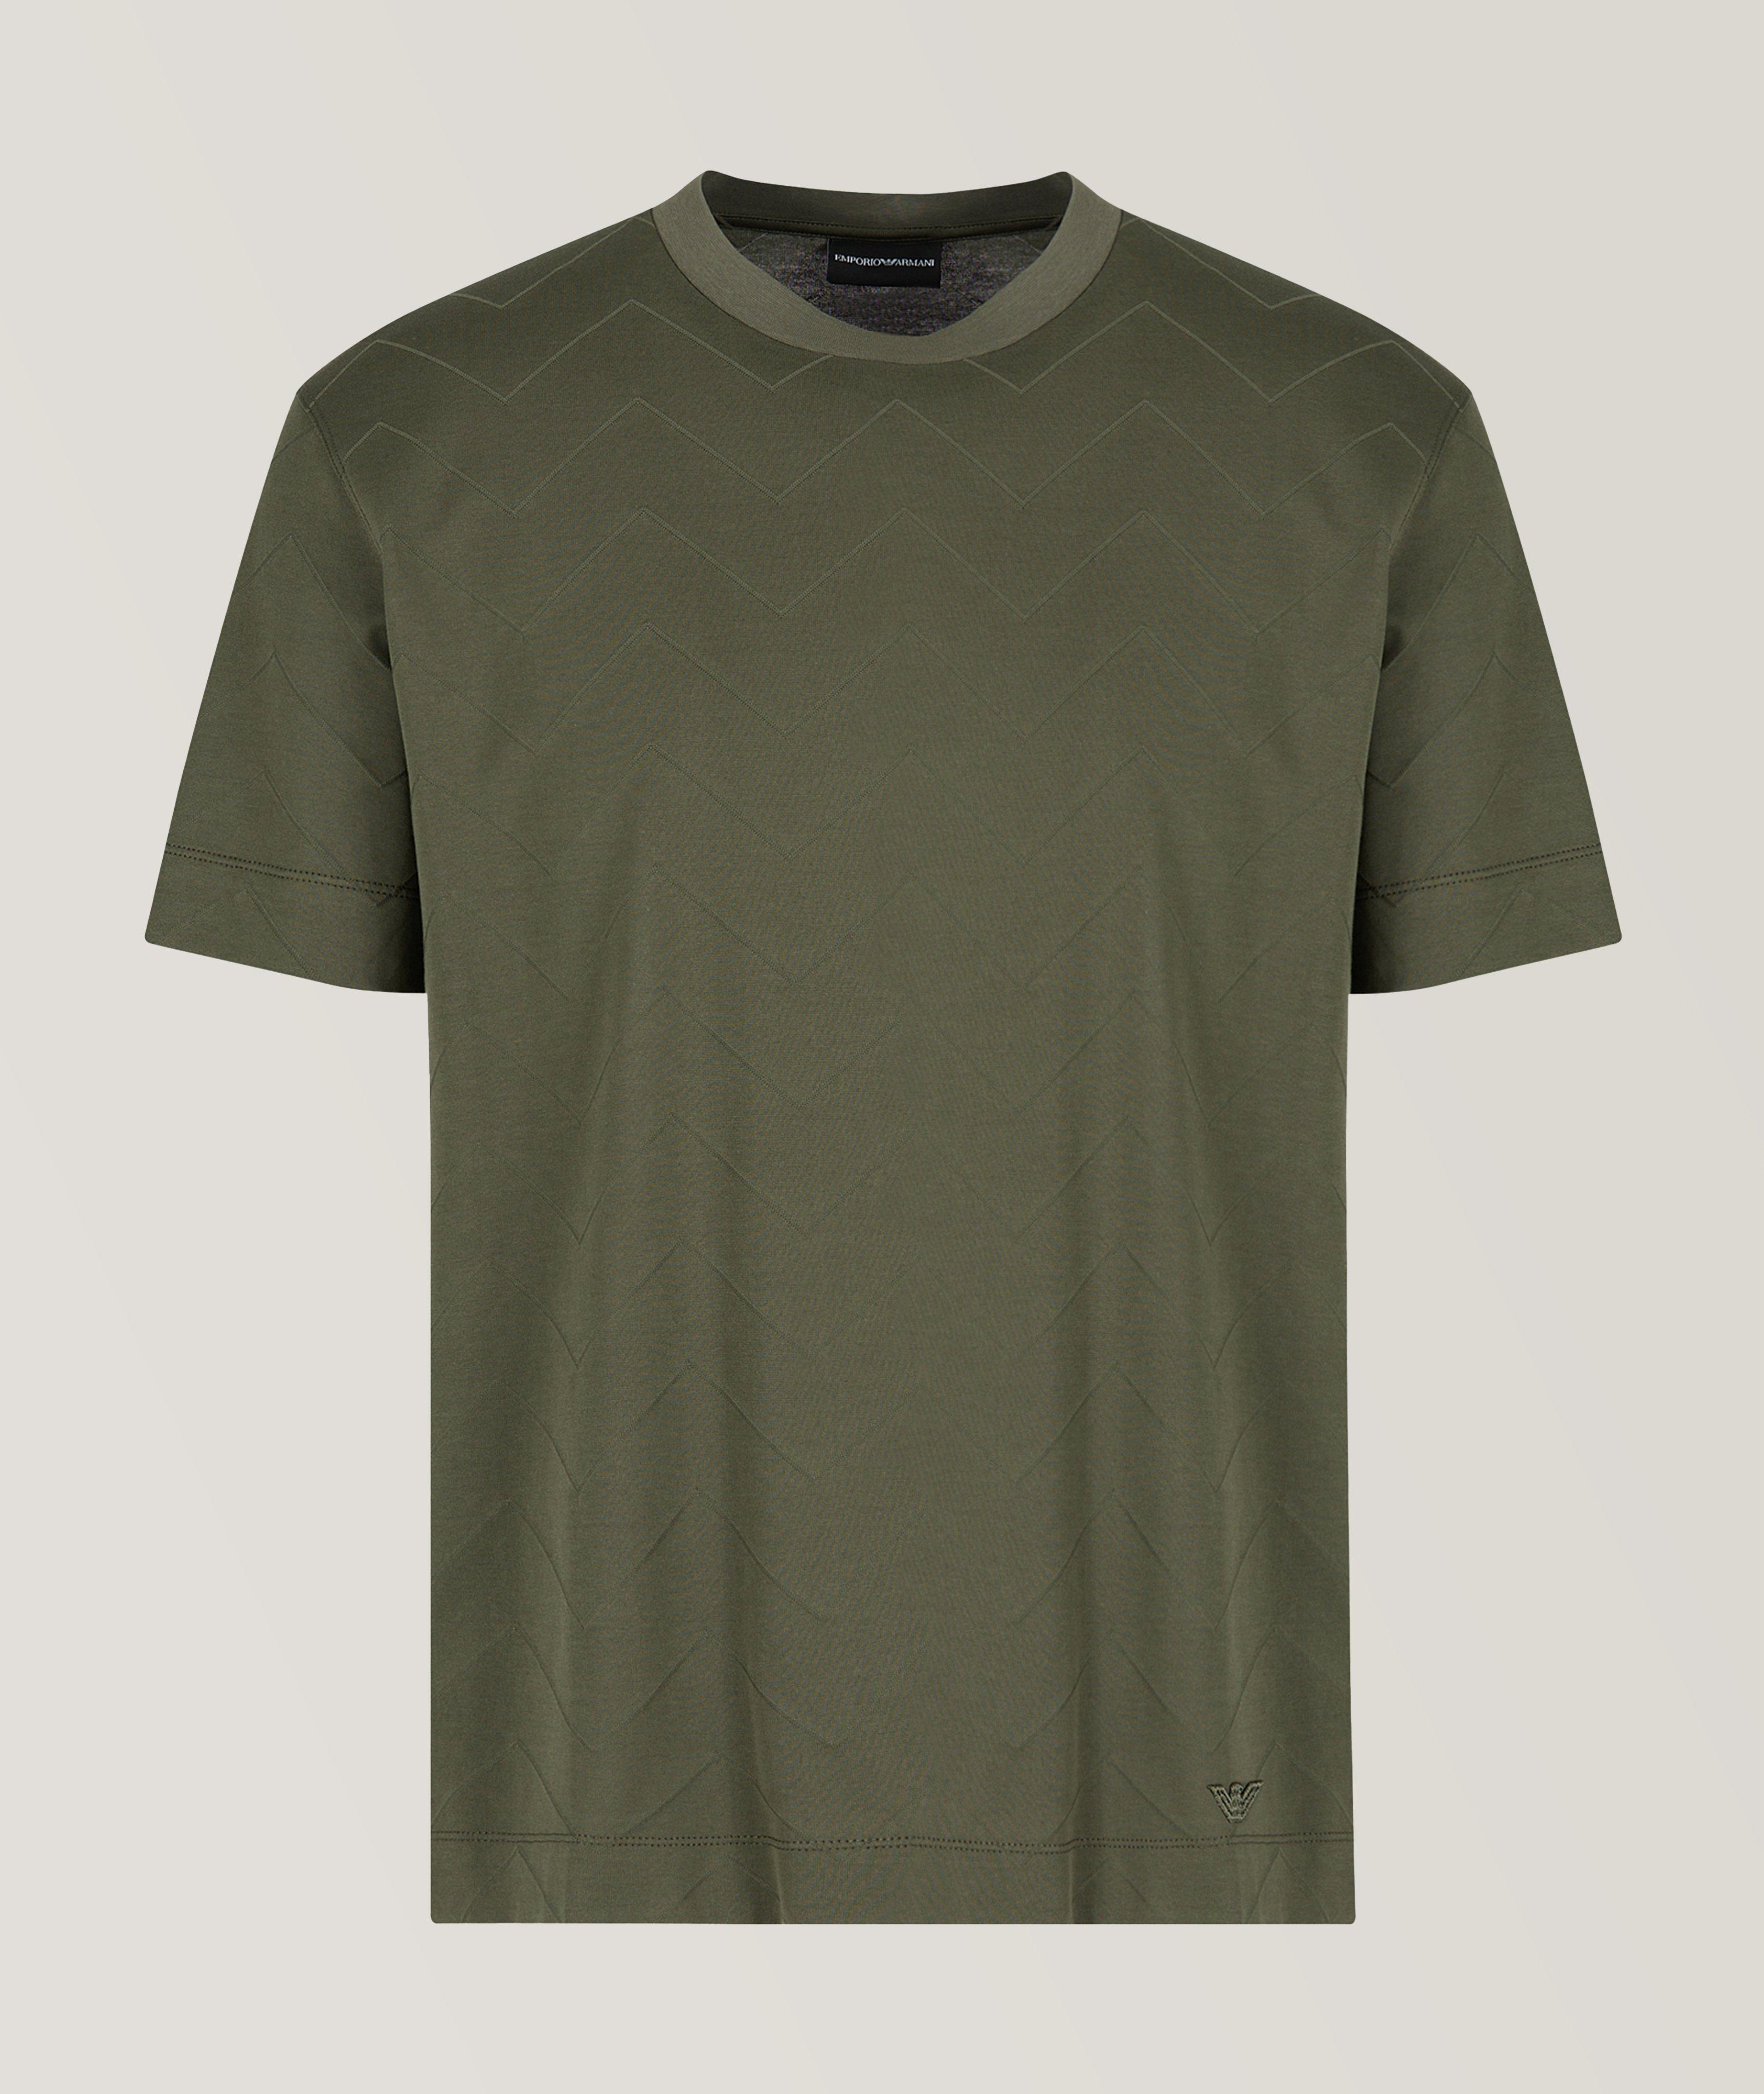 Emporio Armani All-Over Jacquard Motif Cotton T-Shirt